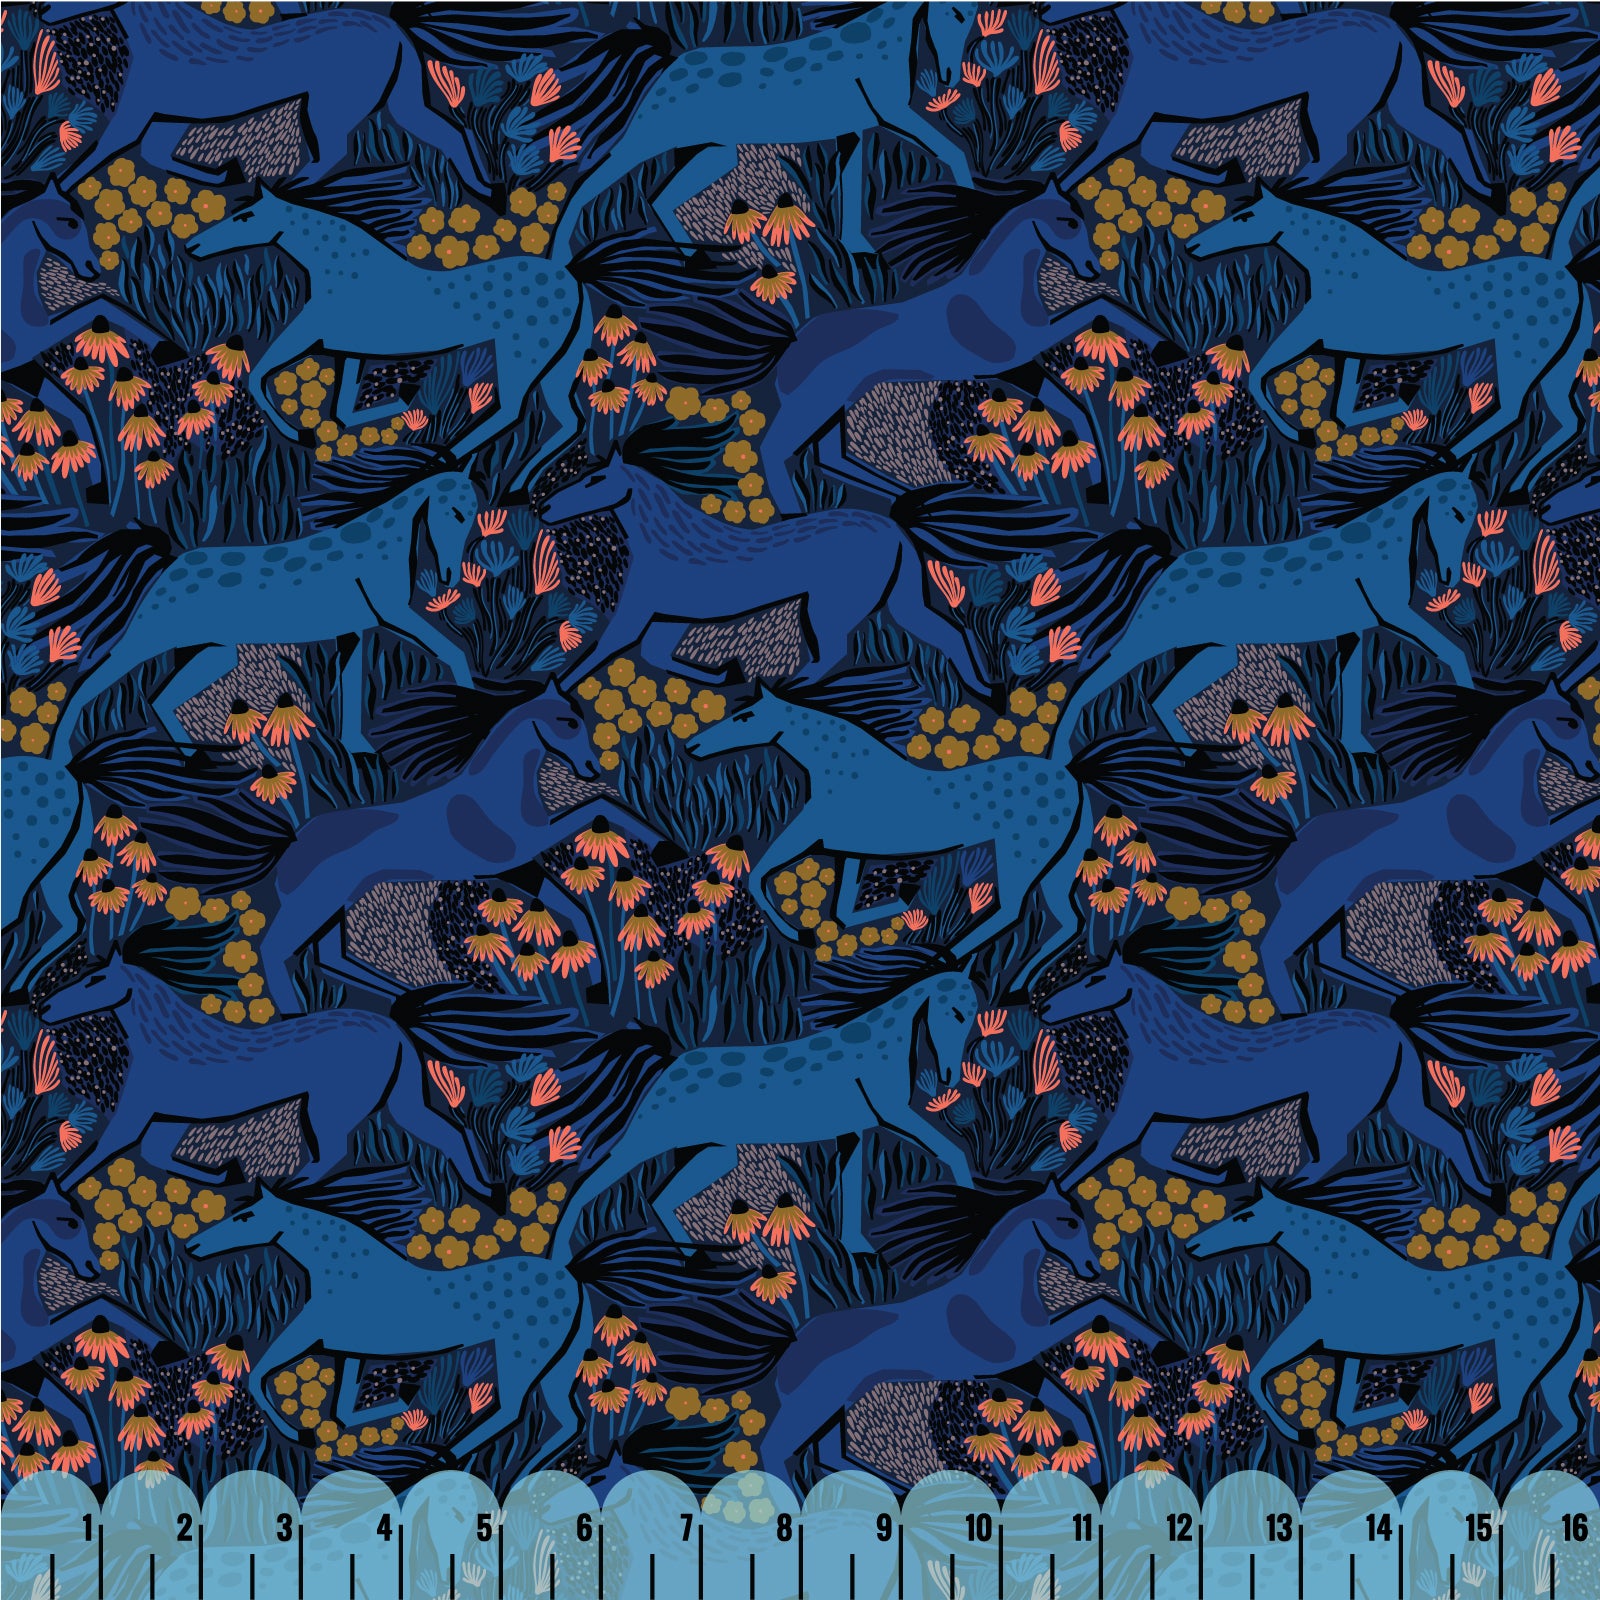 Cloud 9 Fabrics - Wild Horses from Wildscape Modal Rayon